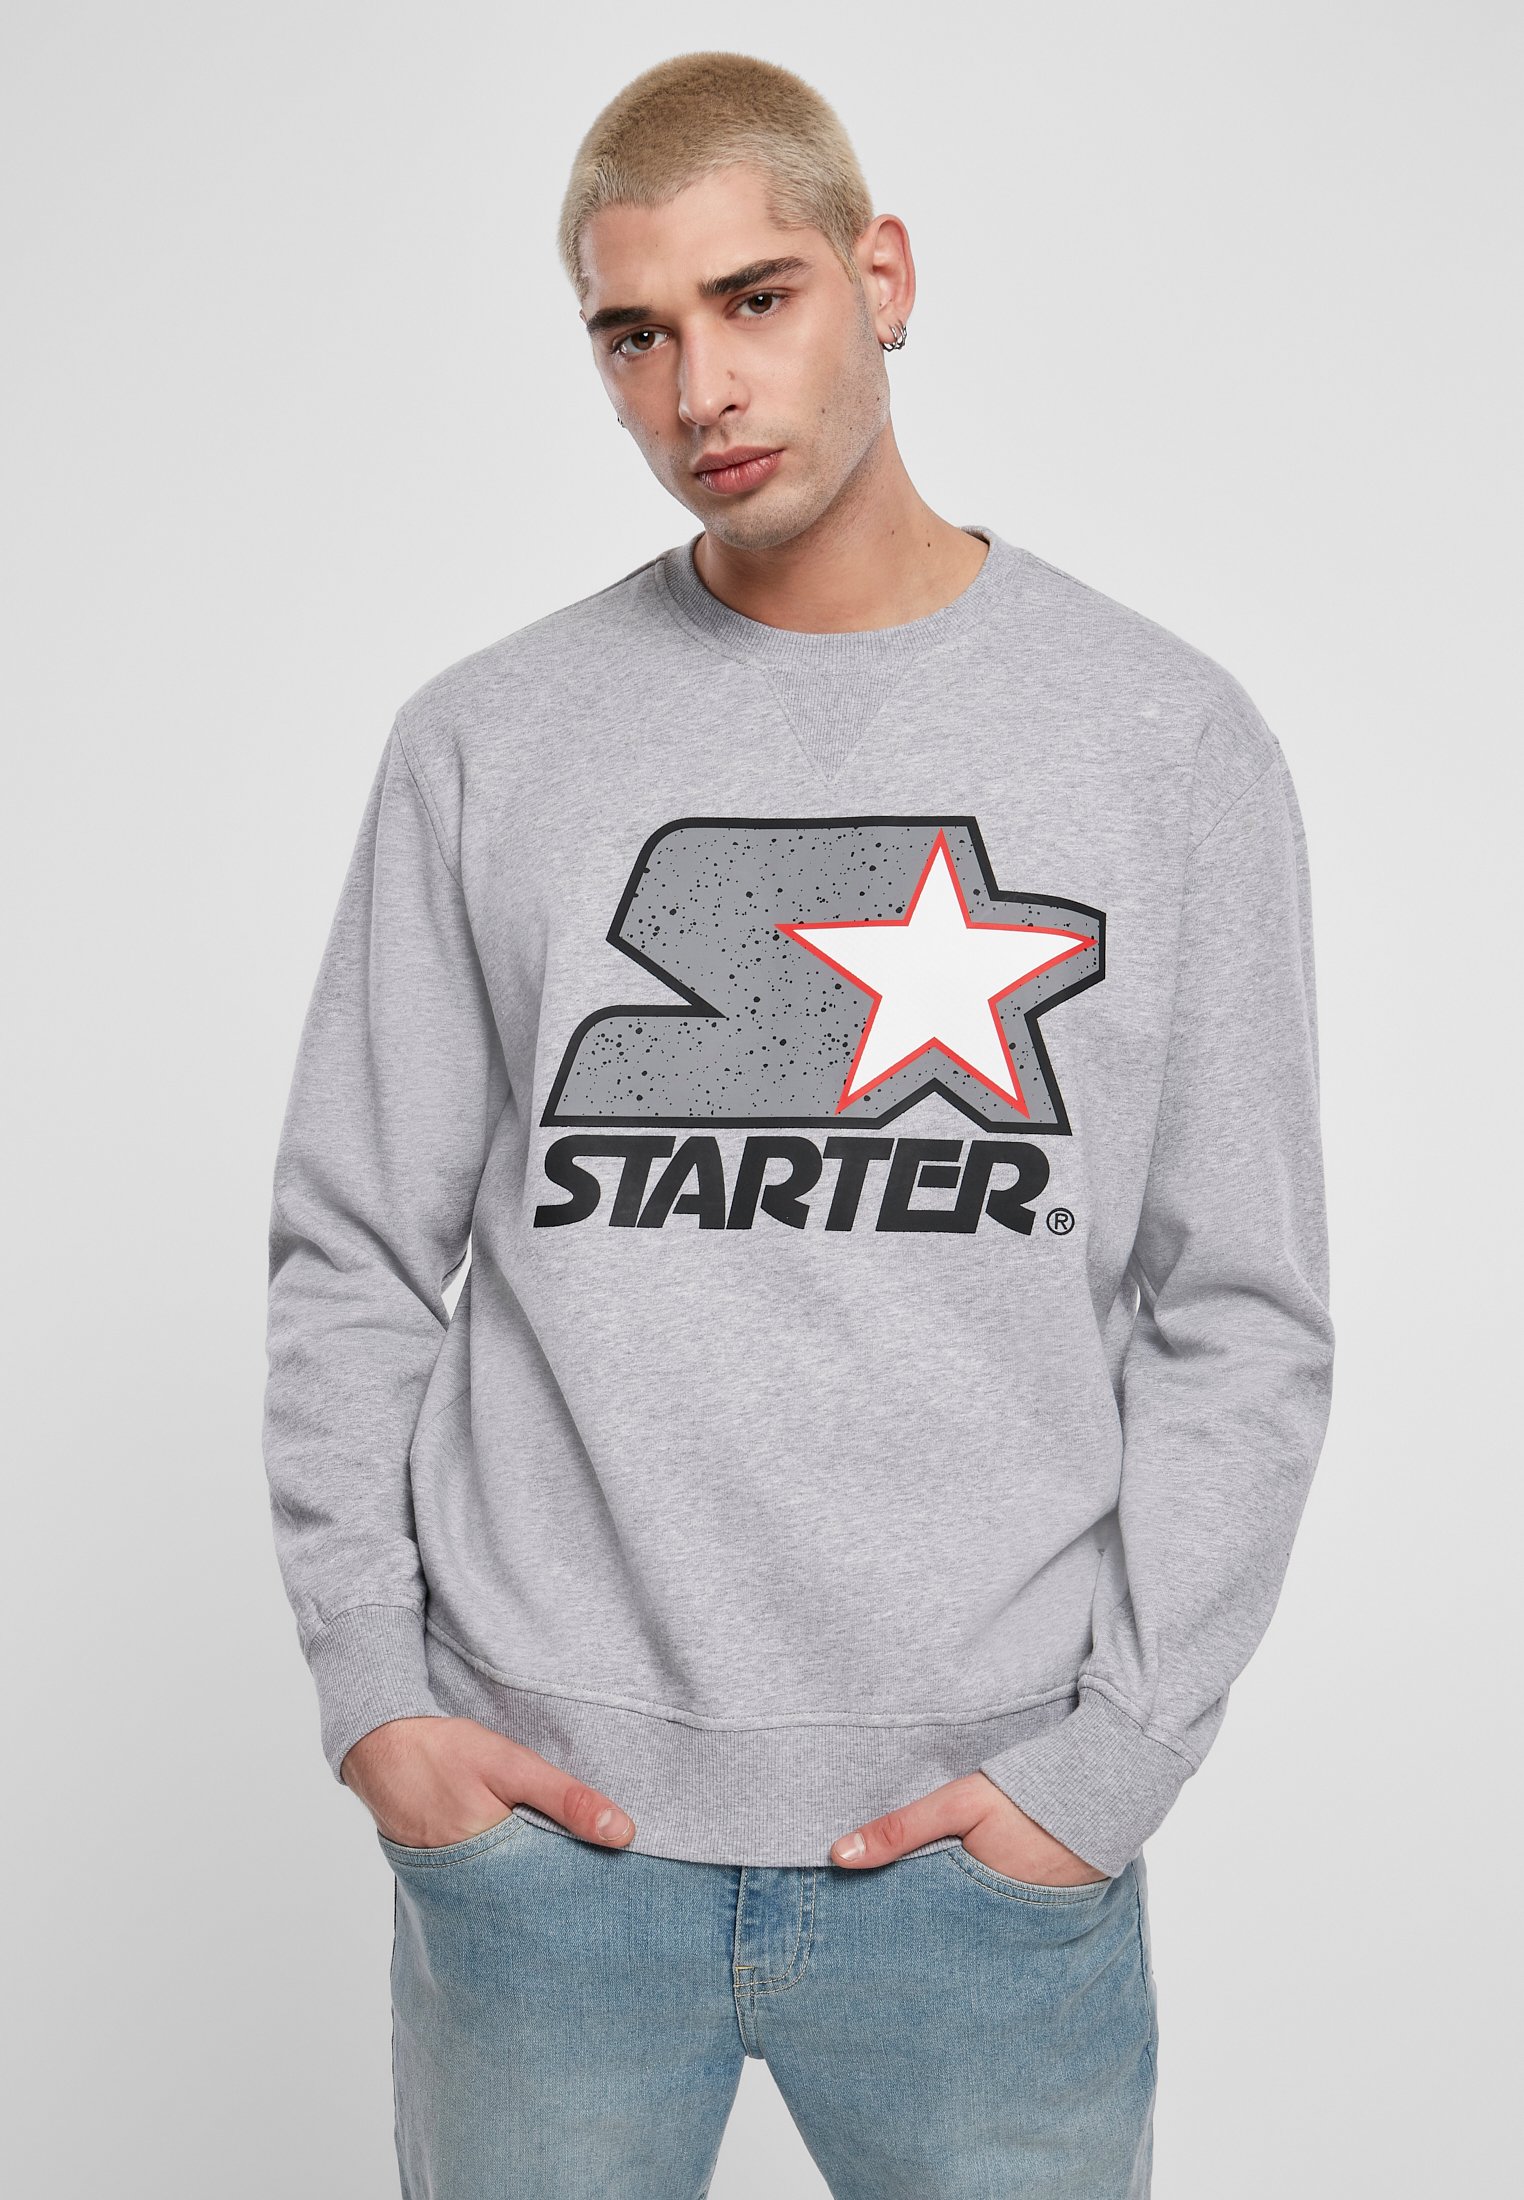 Starter Multicolored Logo Sweat Crewneck heather gray im Sale-starter black label 1